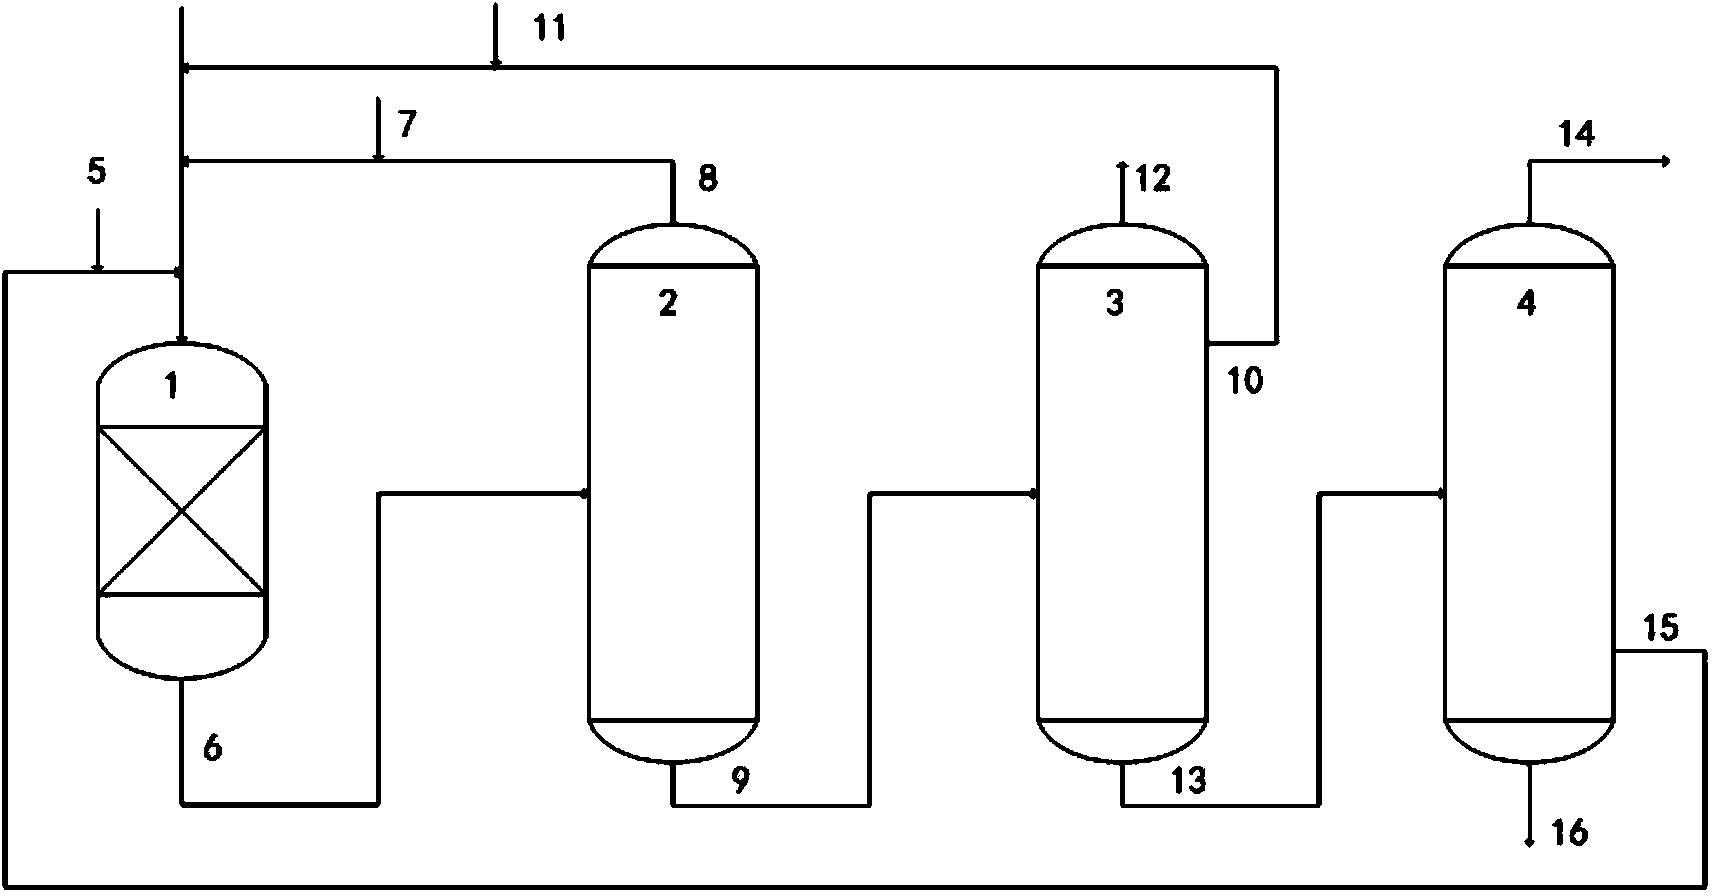 Process method for preparing (methyl) tert-butyl acrylate through continuous method